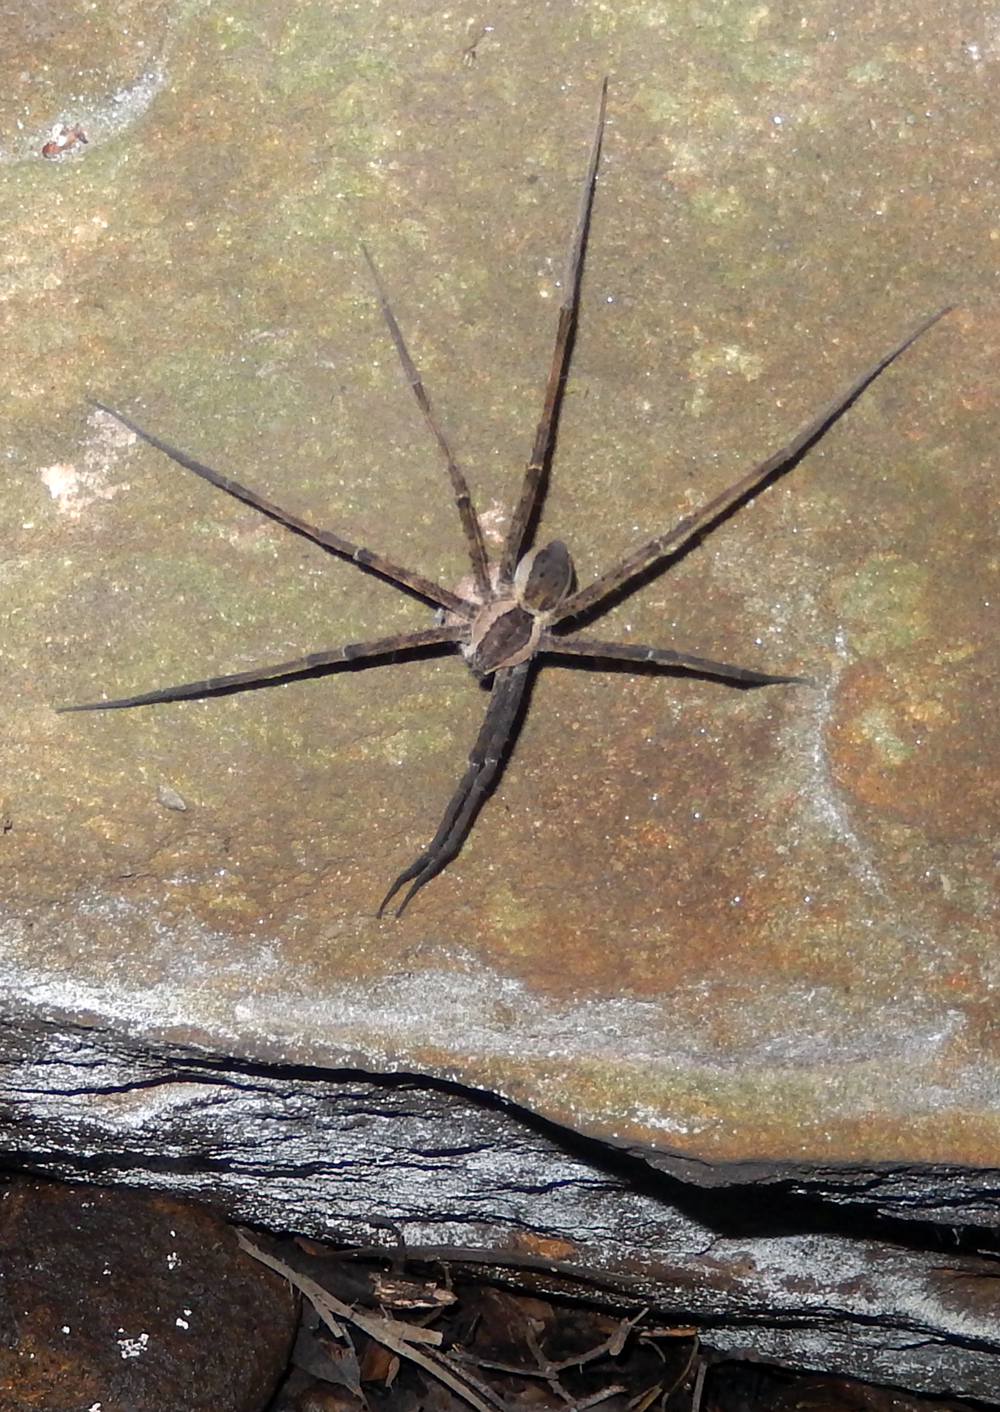 Giant Water Spider - Megadolomedes australianus